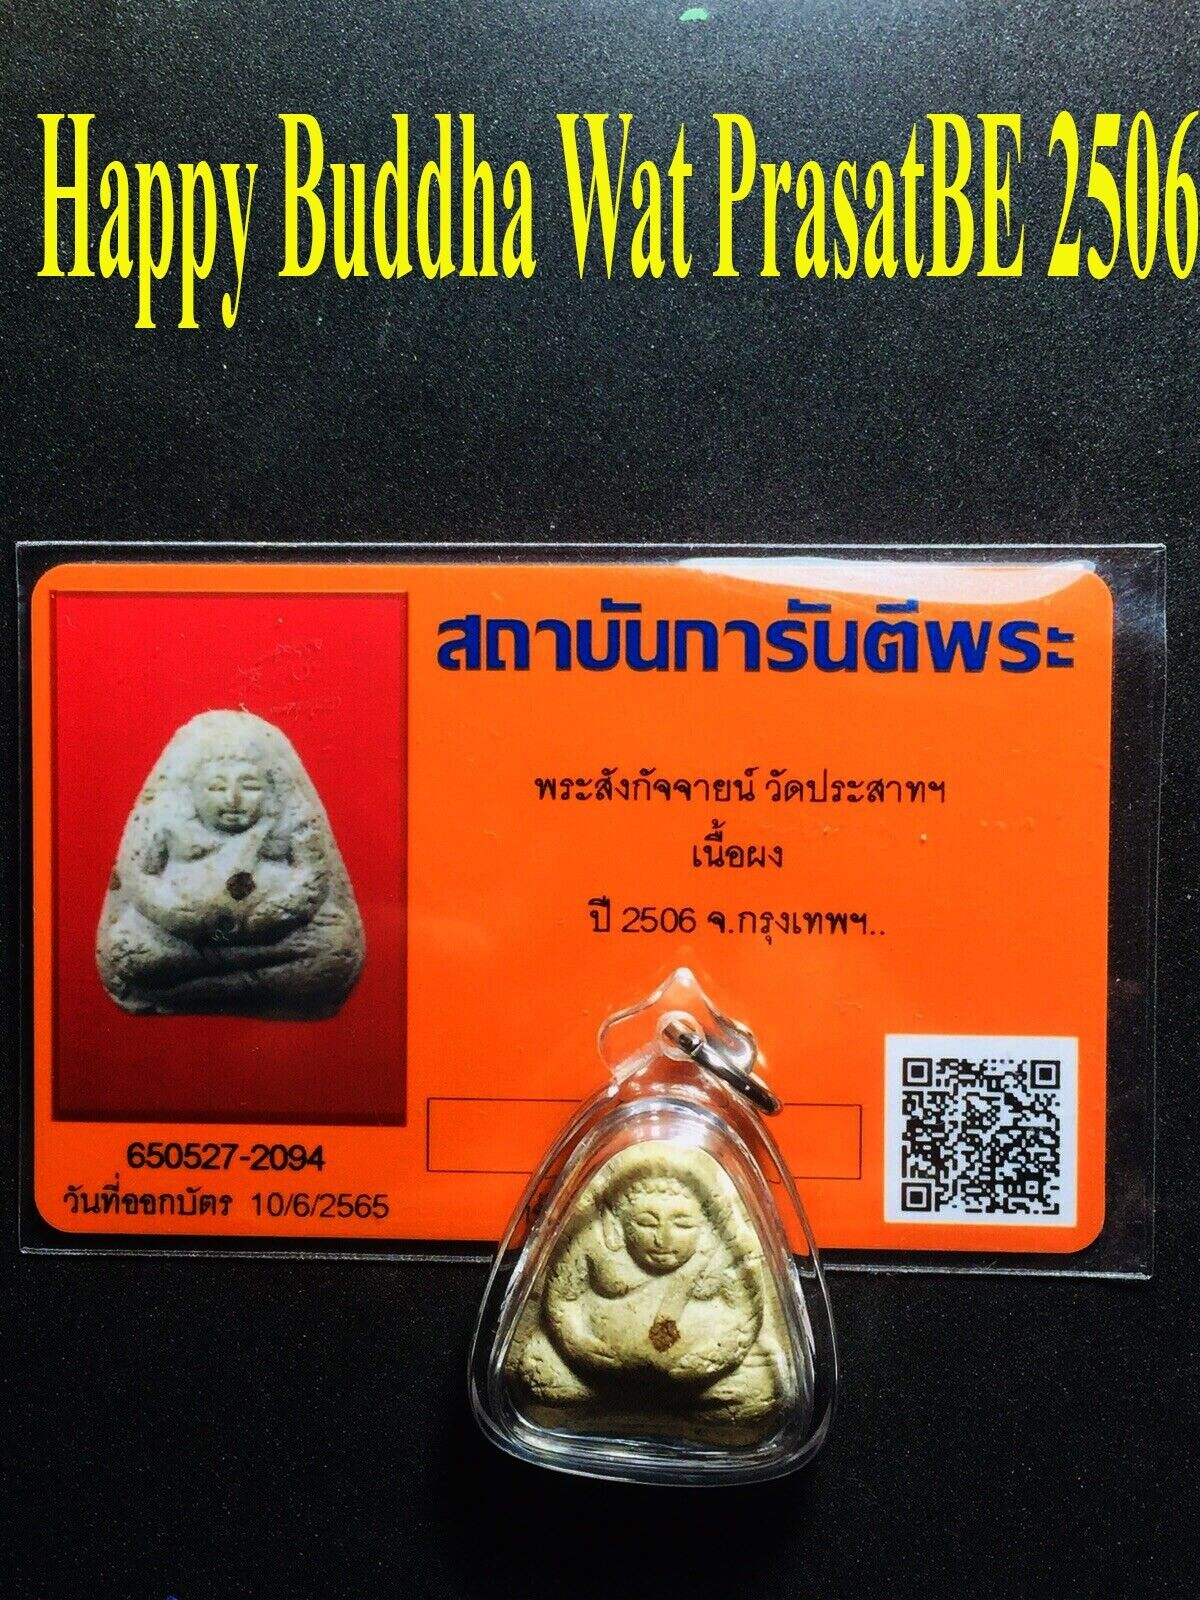 SANGKACHAI AUTHENTIC THAI AMULET  HAPPY BUDDHA WAT PRASAT BE2506  CERTIFICATE